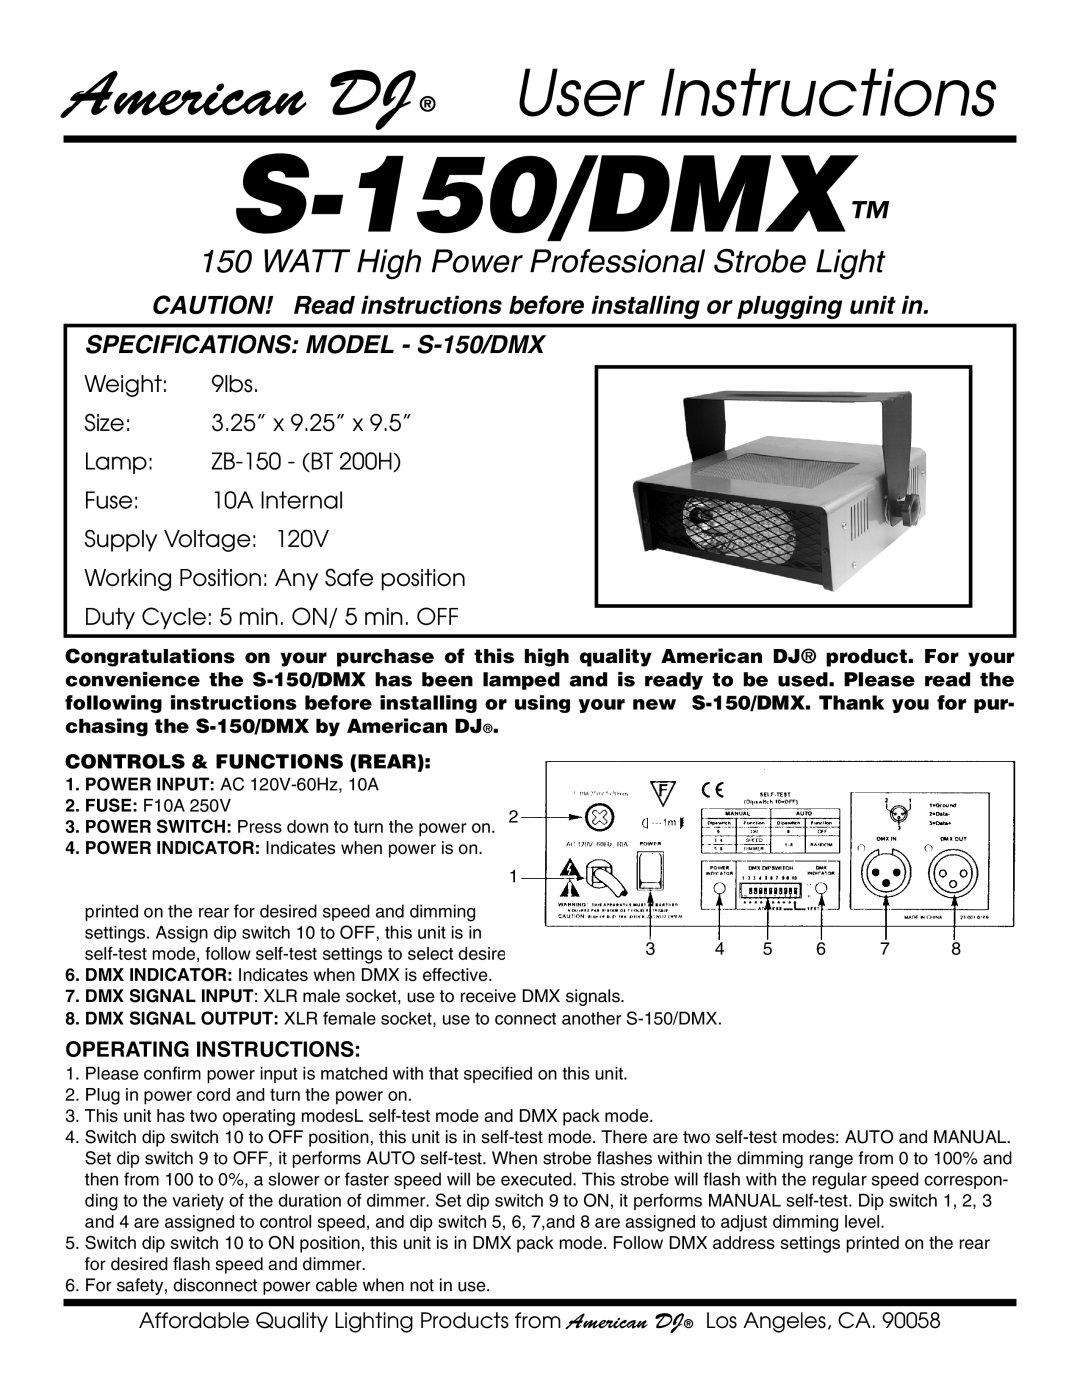 American DJ S-150/DMX specifications American DJ User Instructions, WATT High Power Professional Strobe Light 